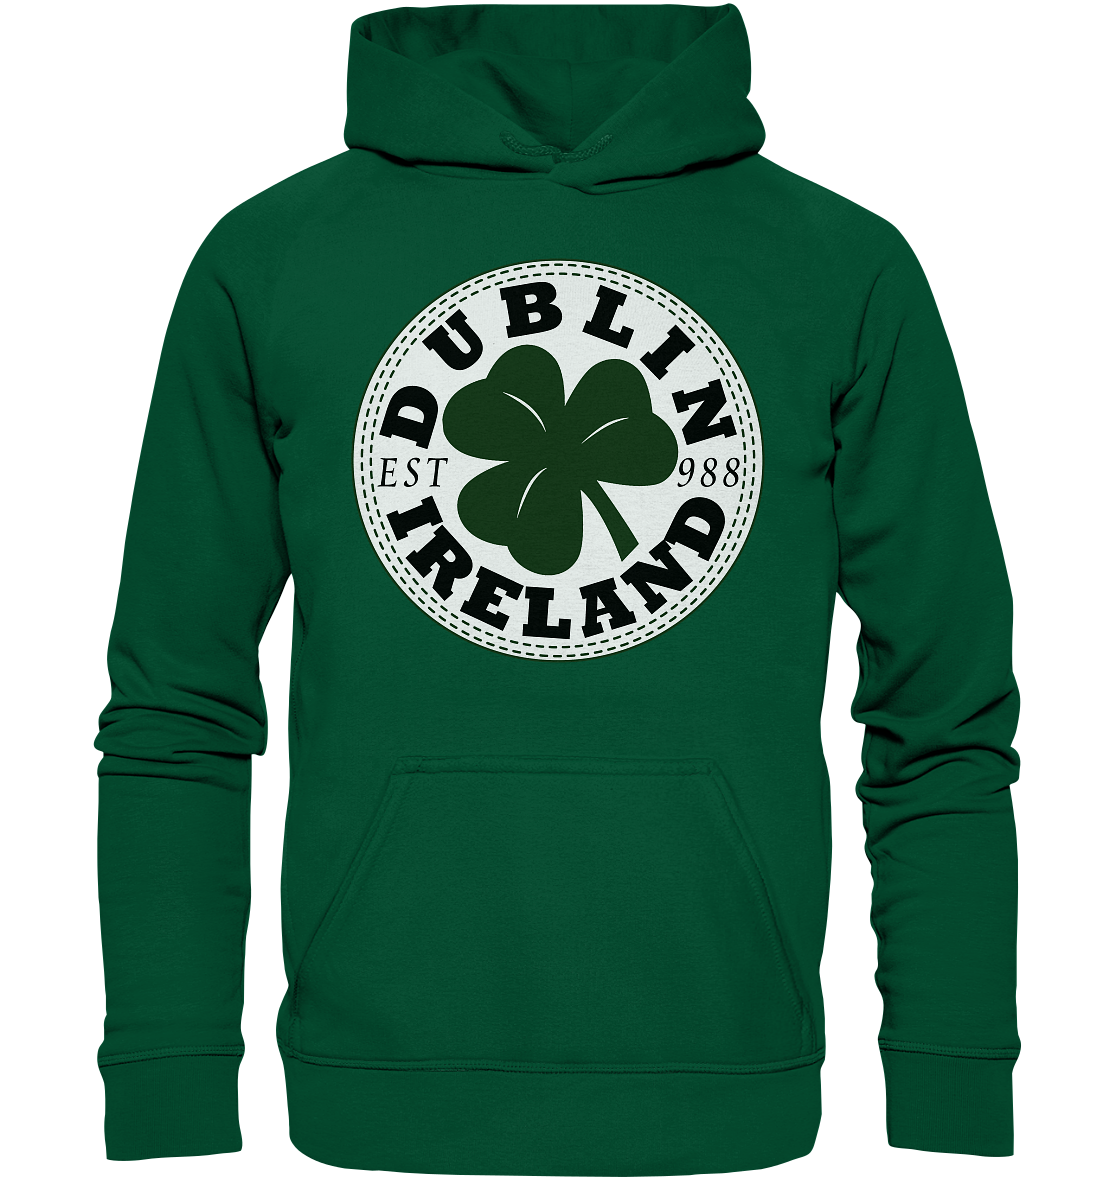 Dublin "Ireland / Est 988" - Basic Unisex Hoodie